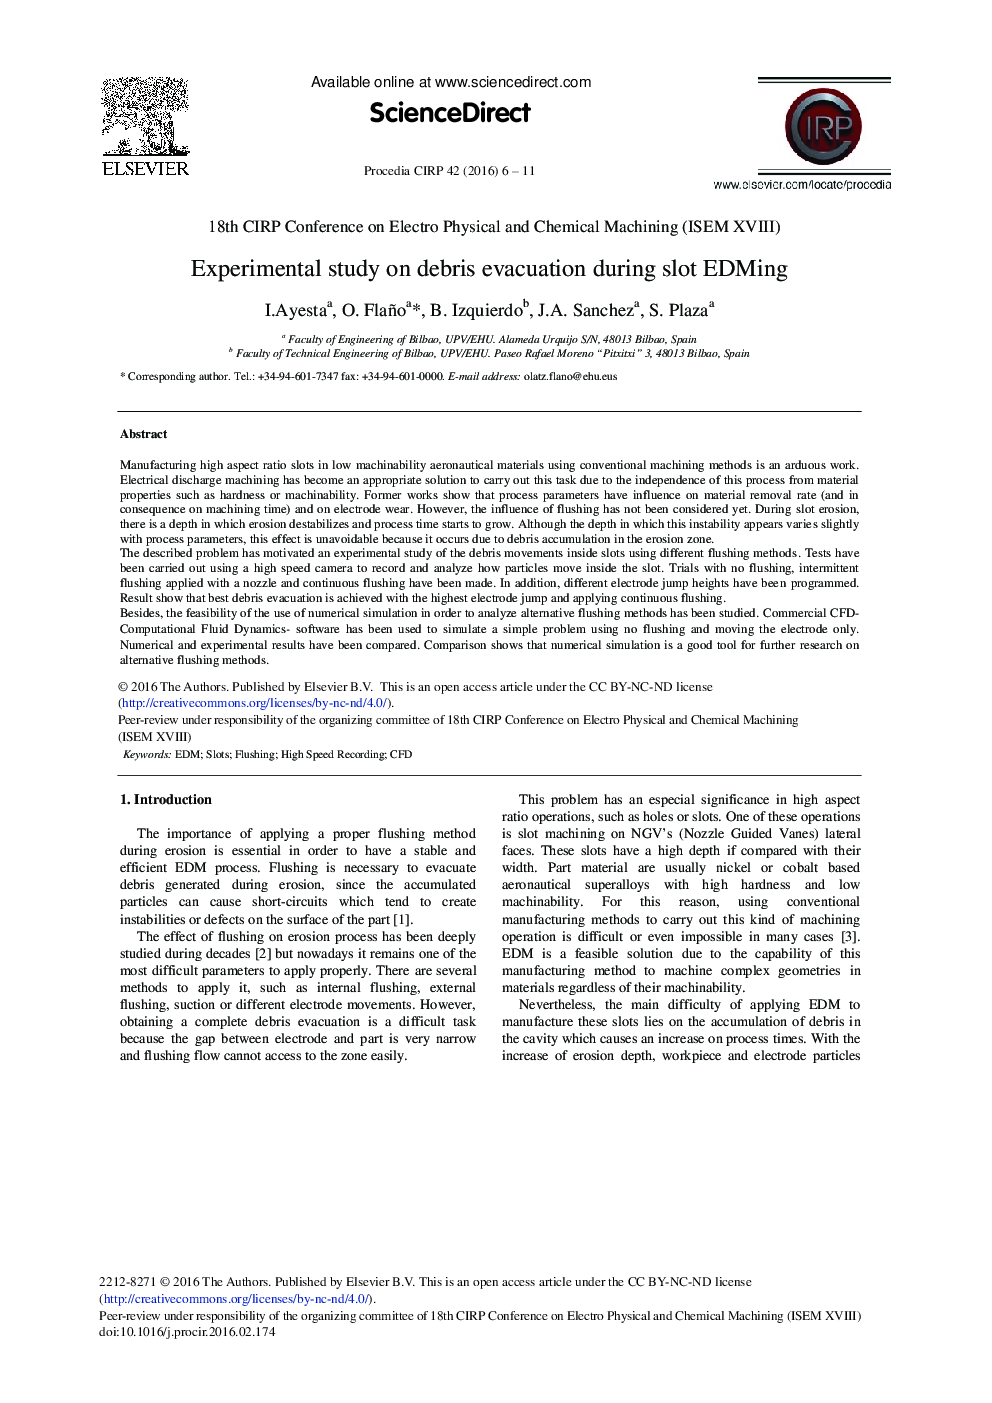 Experimental Study on Debris Evacuation during Slot EDMing 